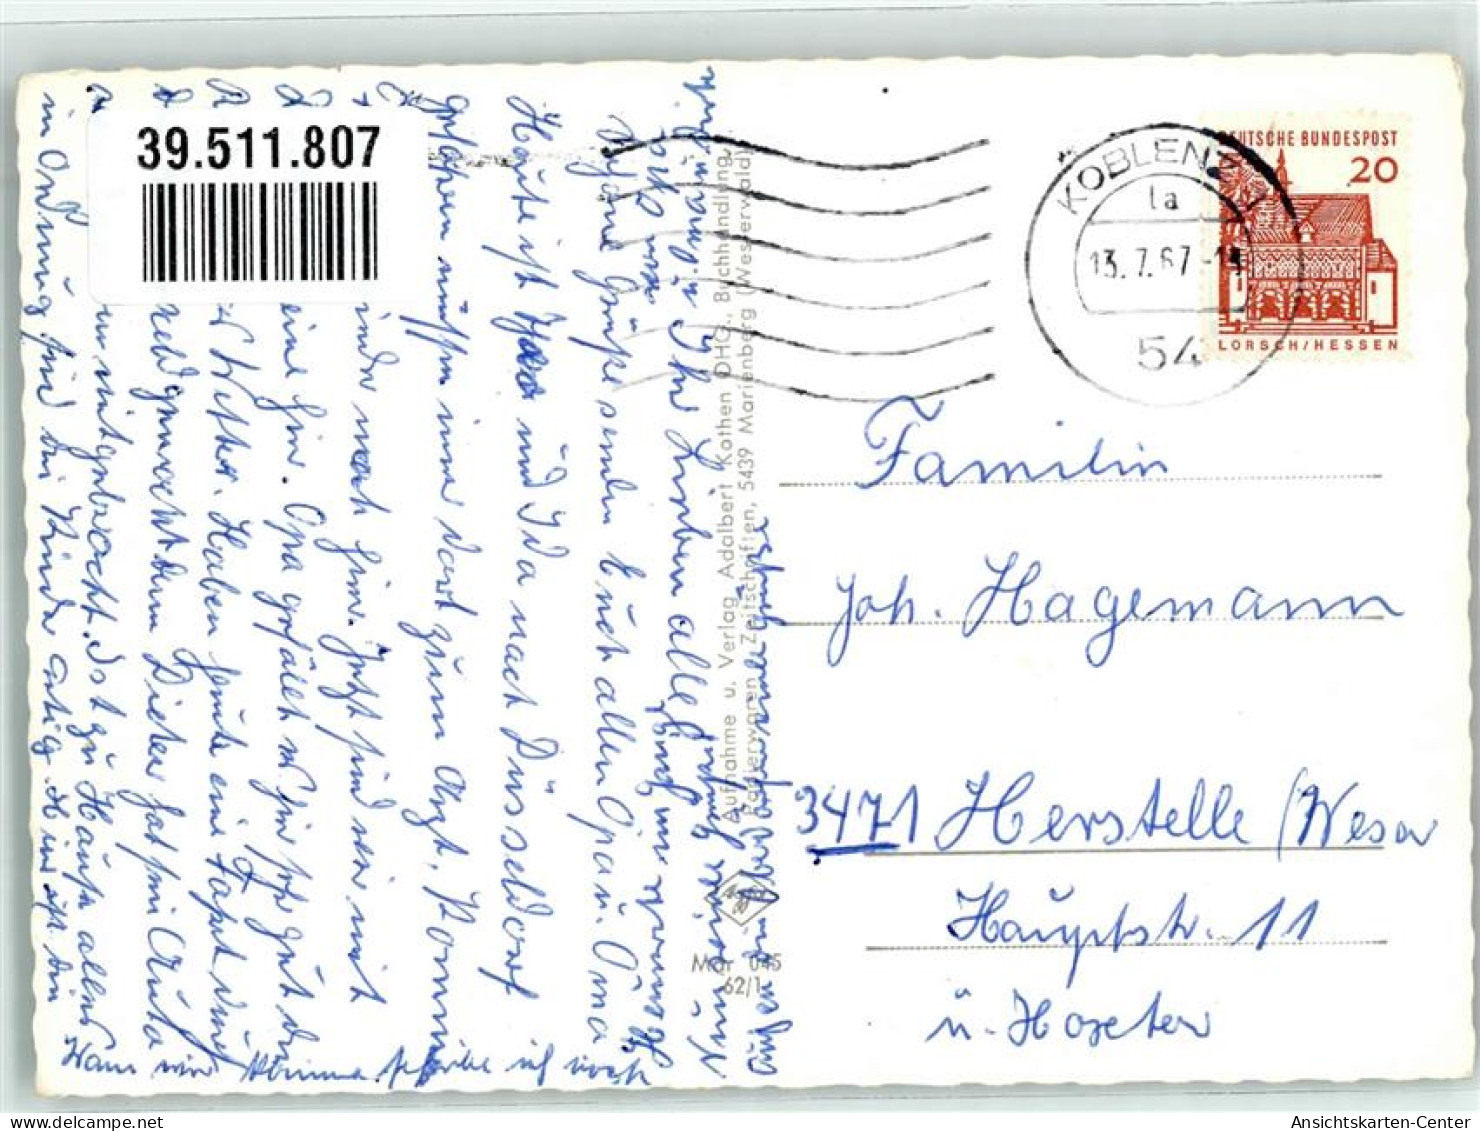 39511807 - Bad Marienberg Westerwald - Bad Marienberg